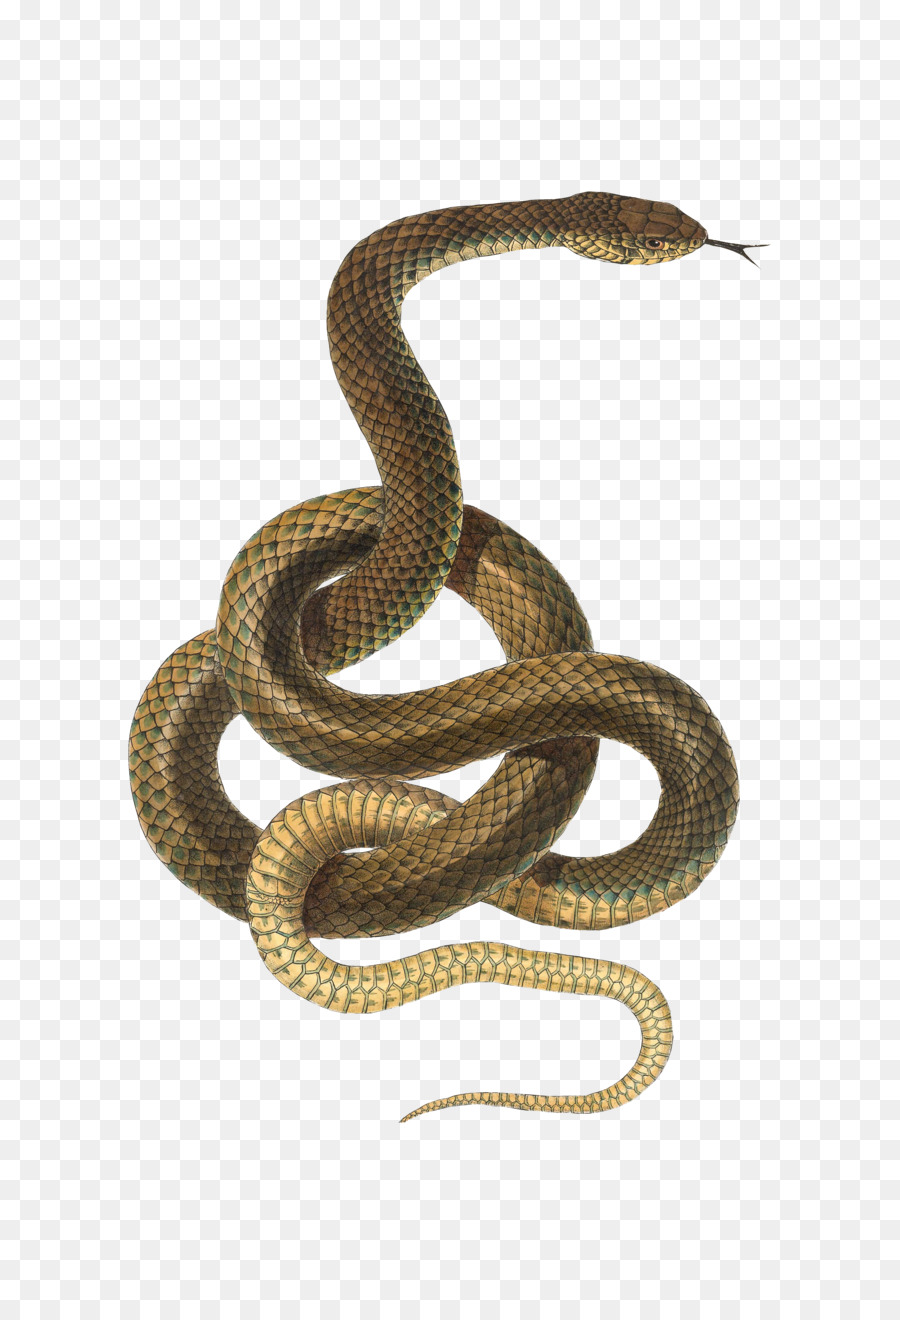 Serpente Na Tela Prank Serpente Tela, Serpentes Na Tela 3D Snake Reptile  Online, serpente, animais, escalado réptil, cobra png